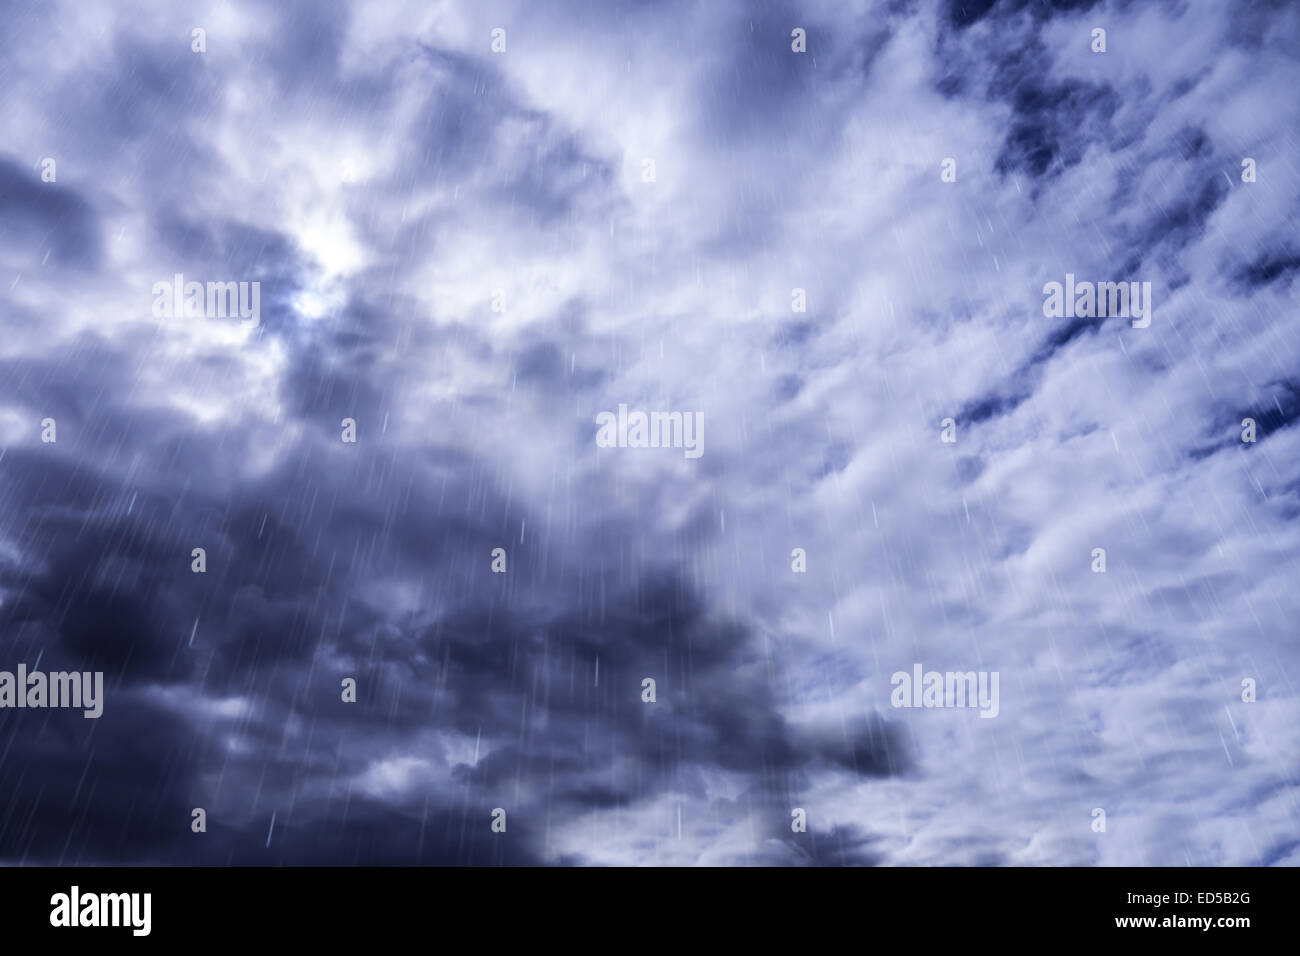 rainfall with dramatic cloudy sky Stock Photo